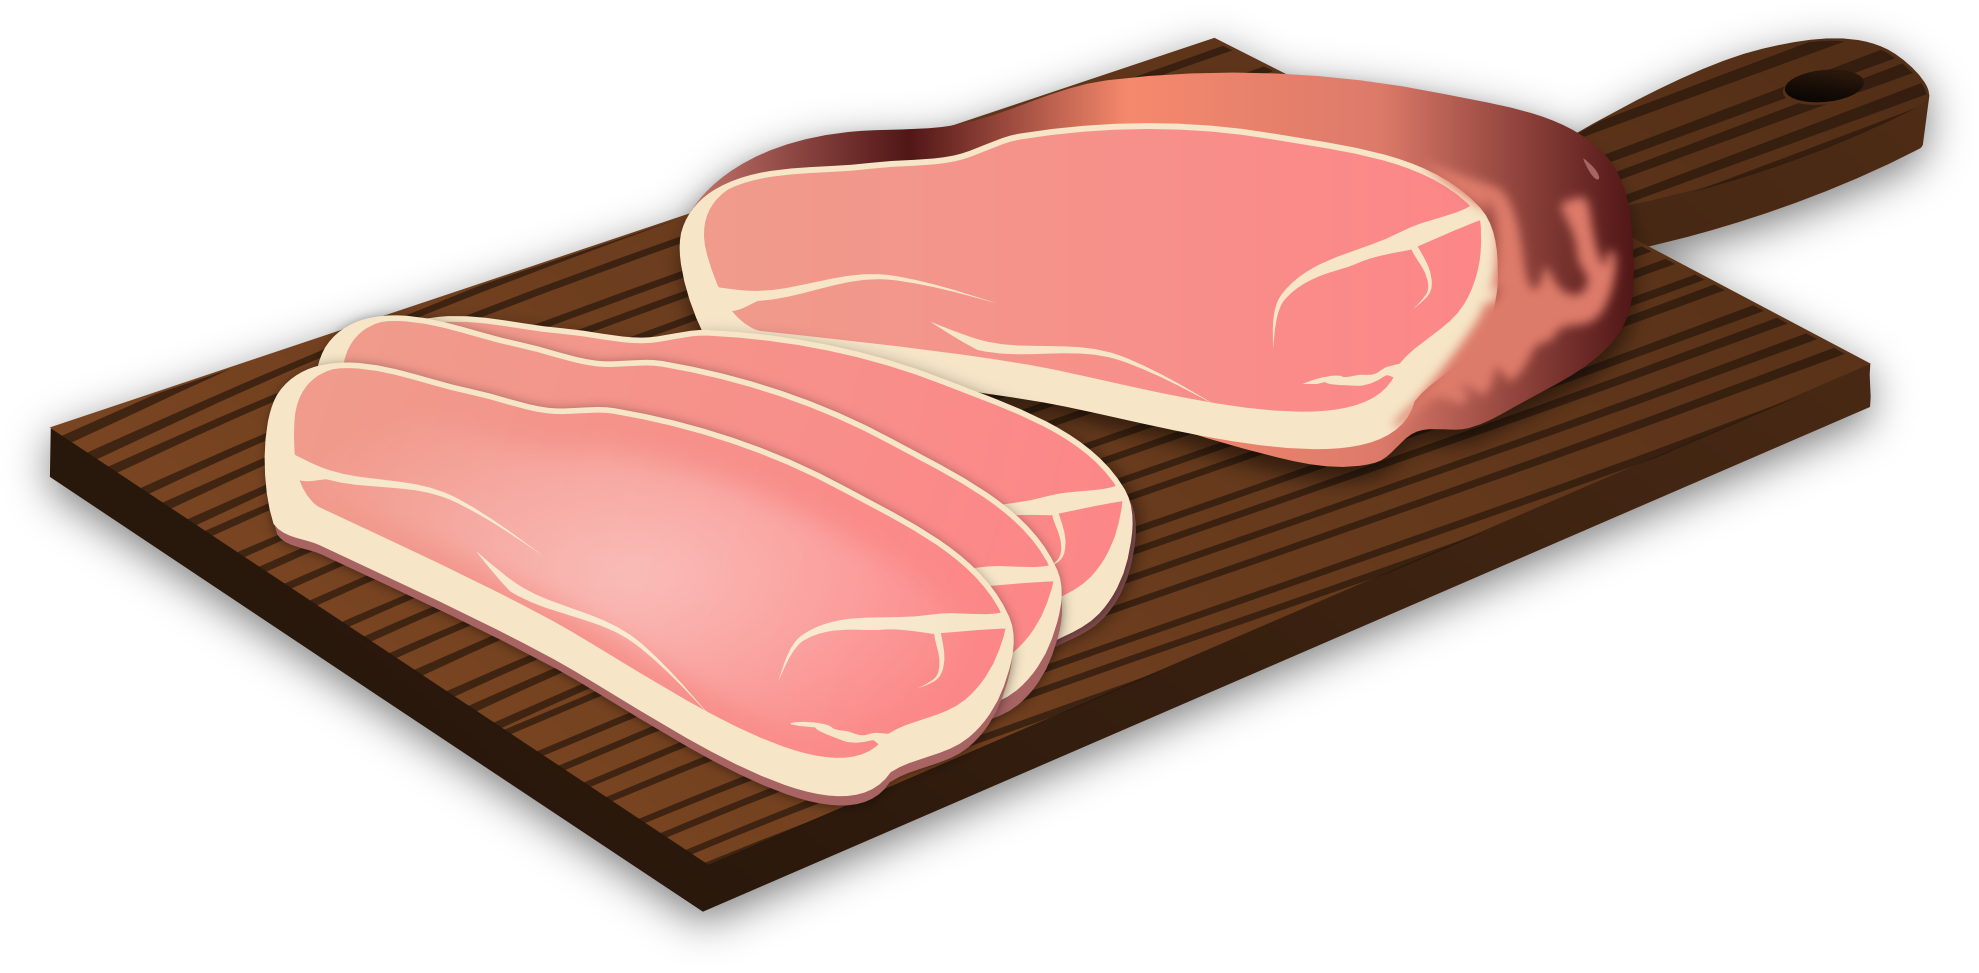 Ham Clip Art